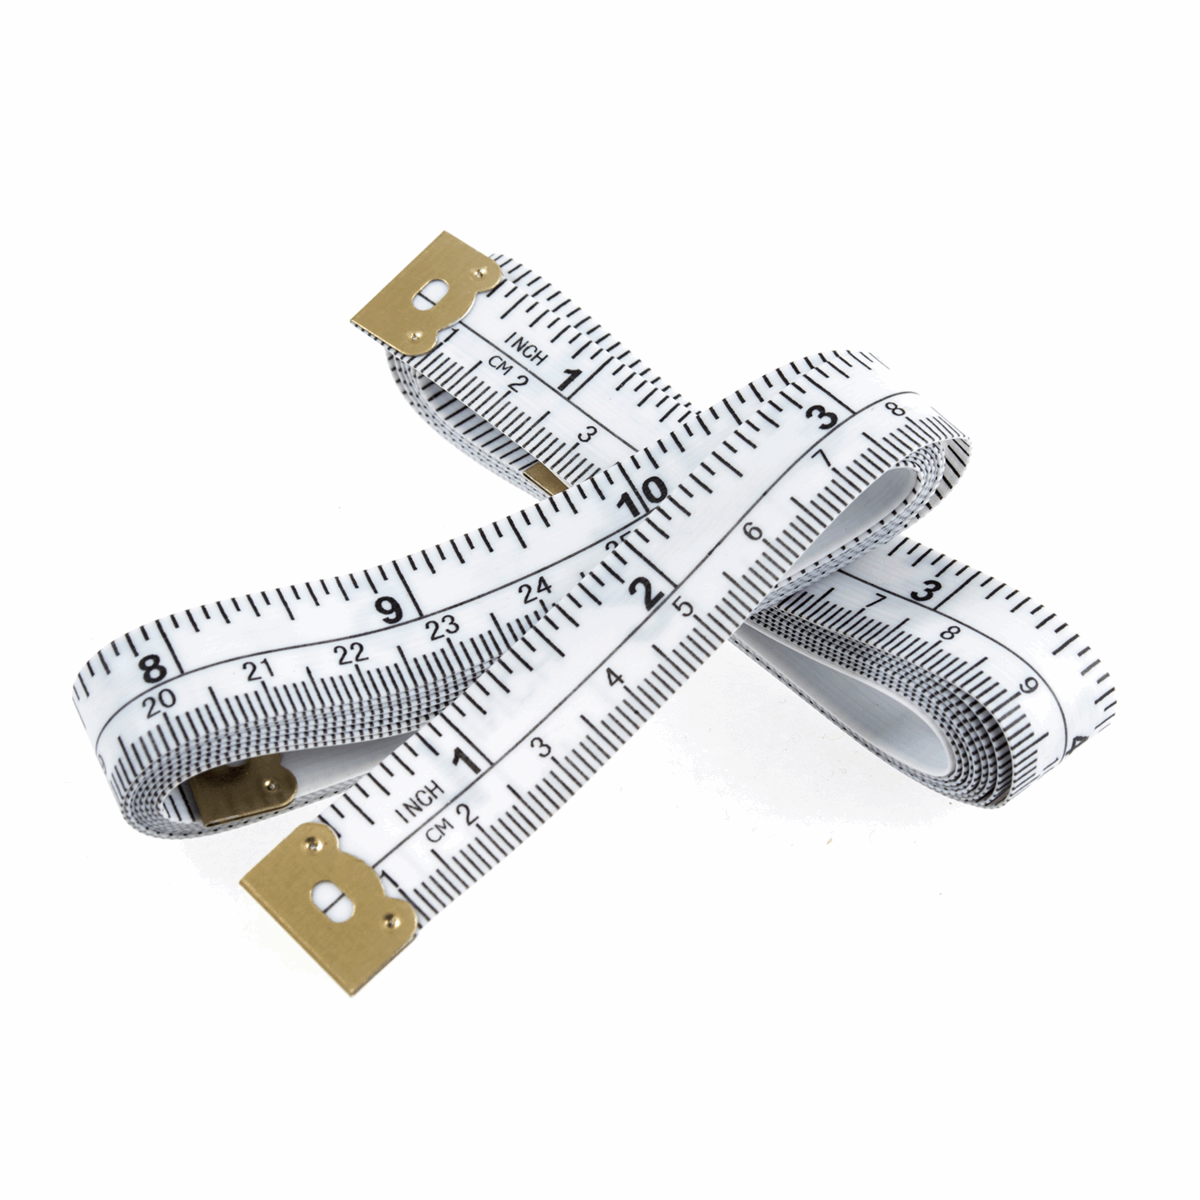 Flexible seamstress's tape measure, Meters, Measuring instruments